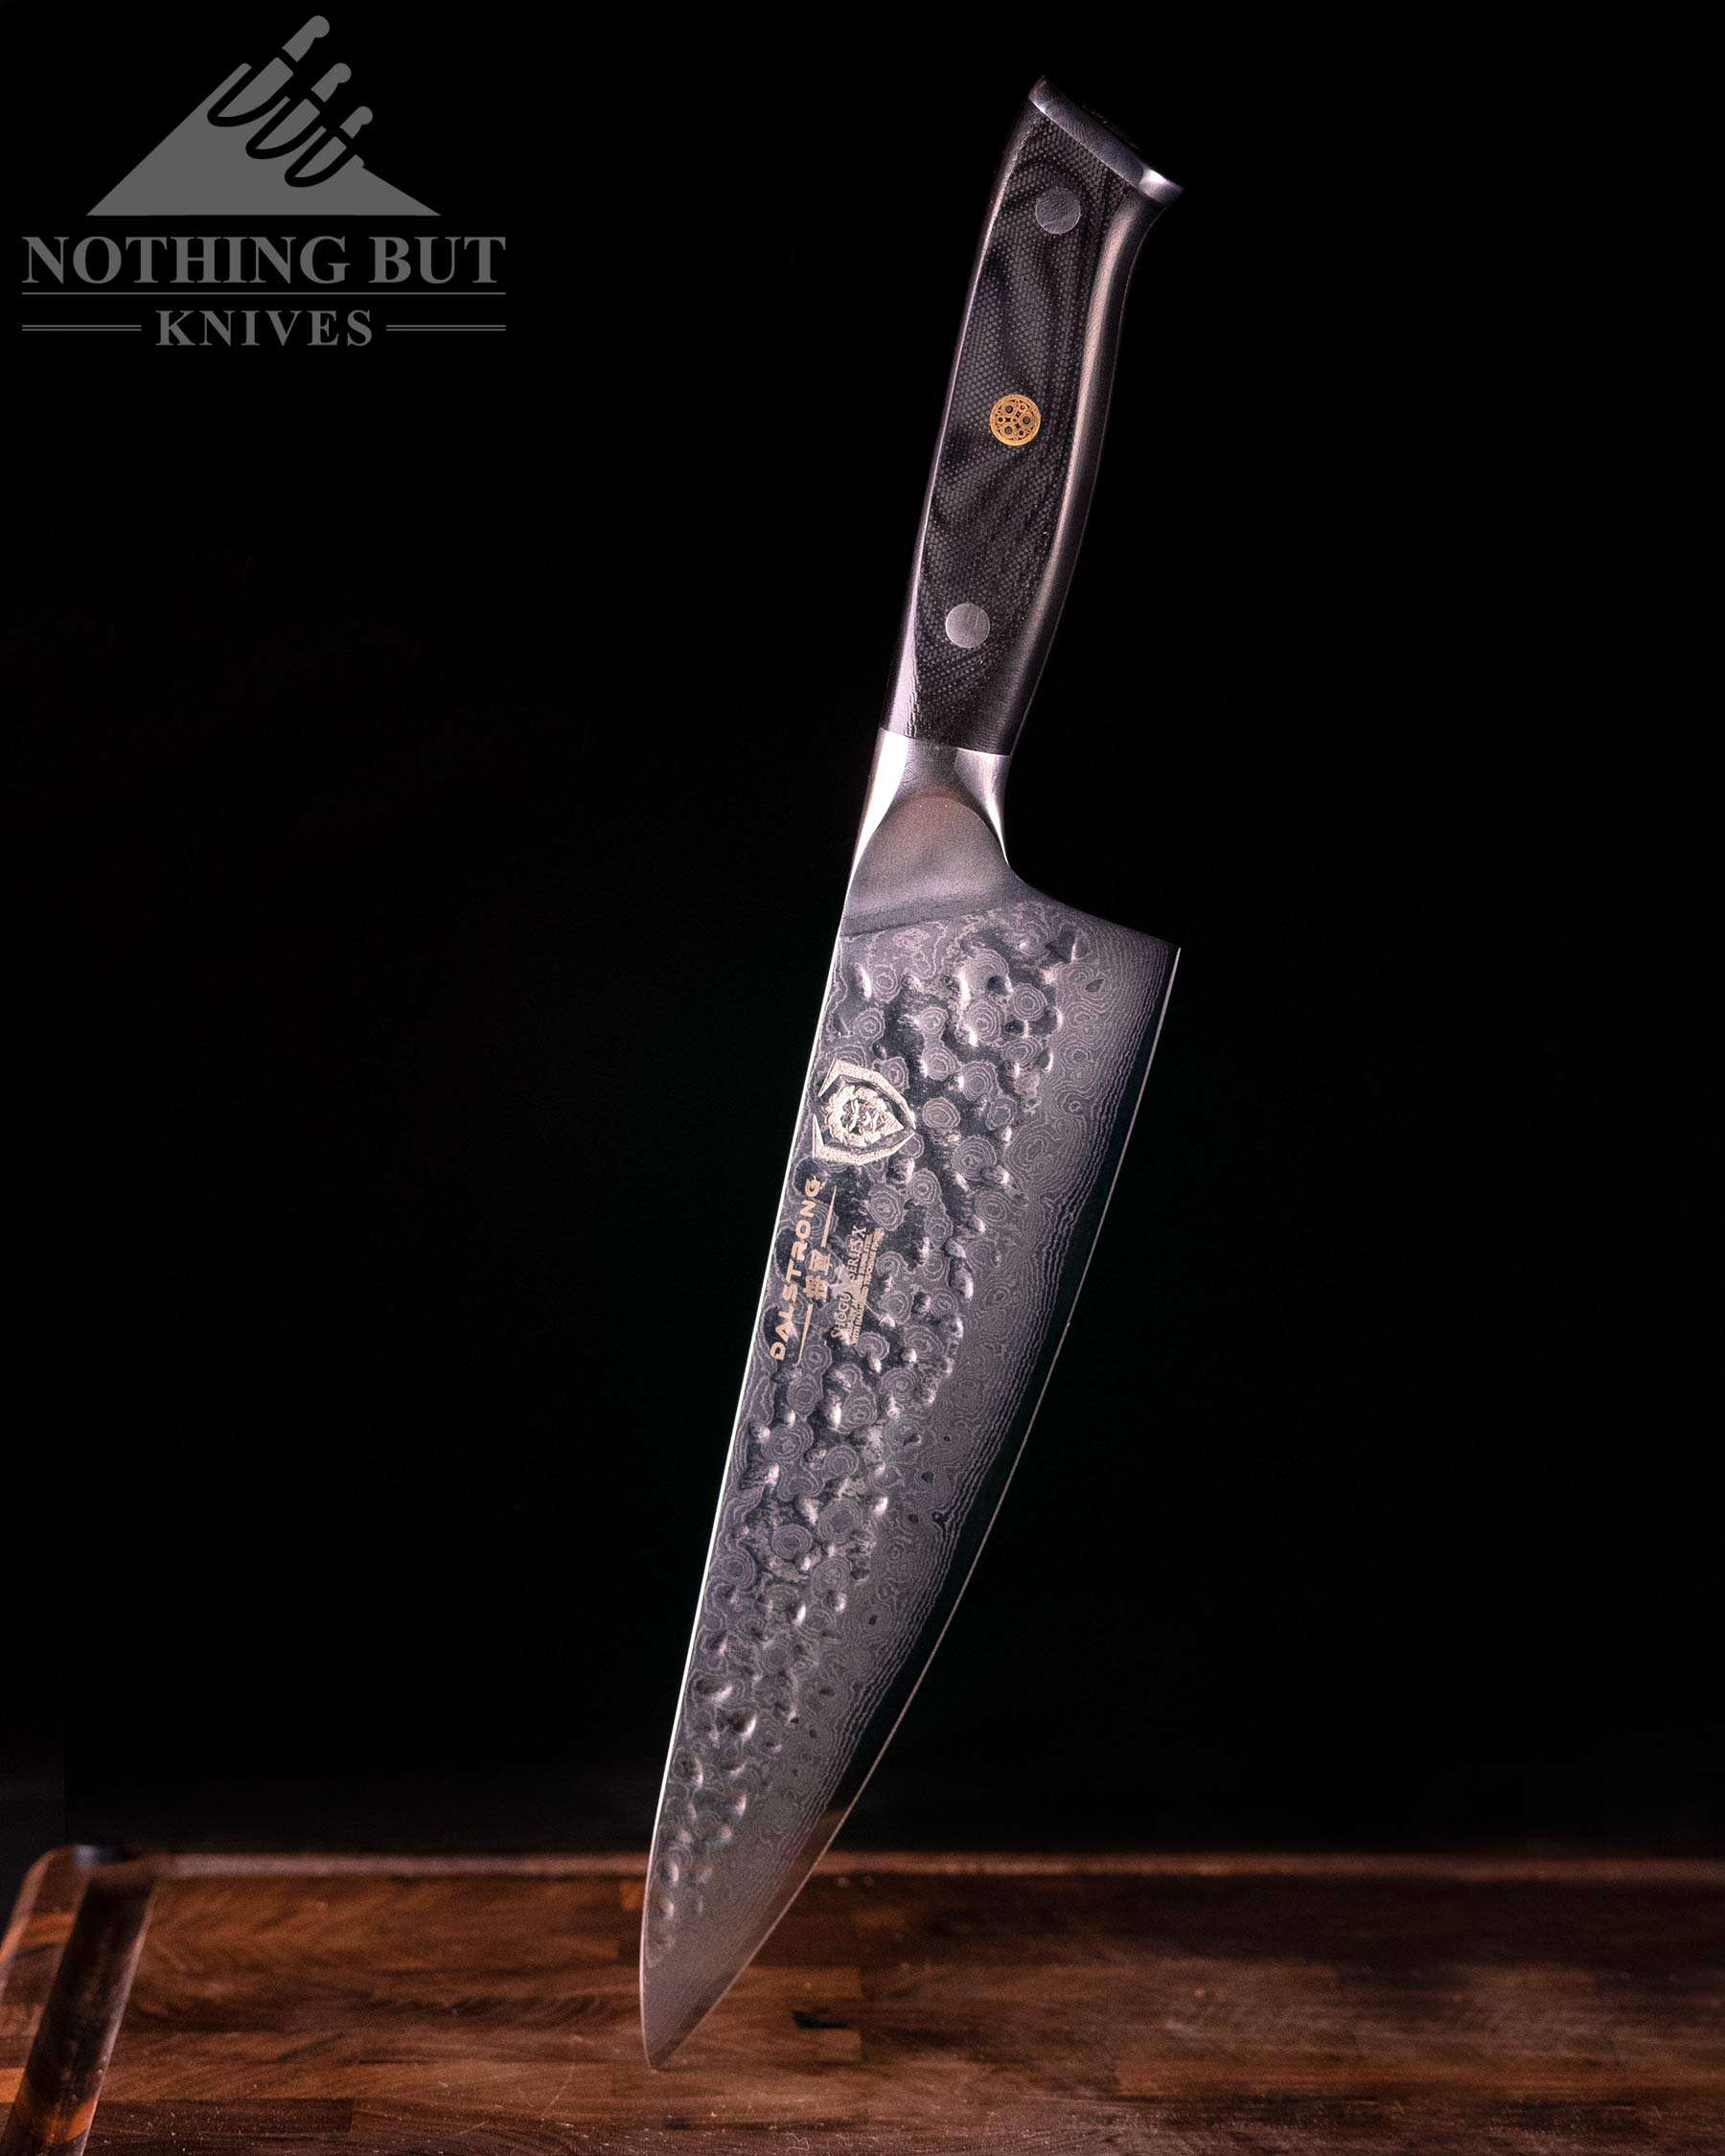 https://www.nothingbutknives.com/wp-content/uploads/2021/09/Dalstrong-Shogun-Chef-Knife-Review.jpg